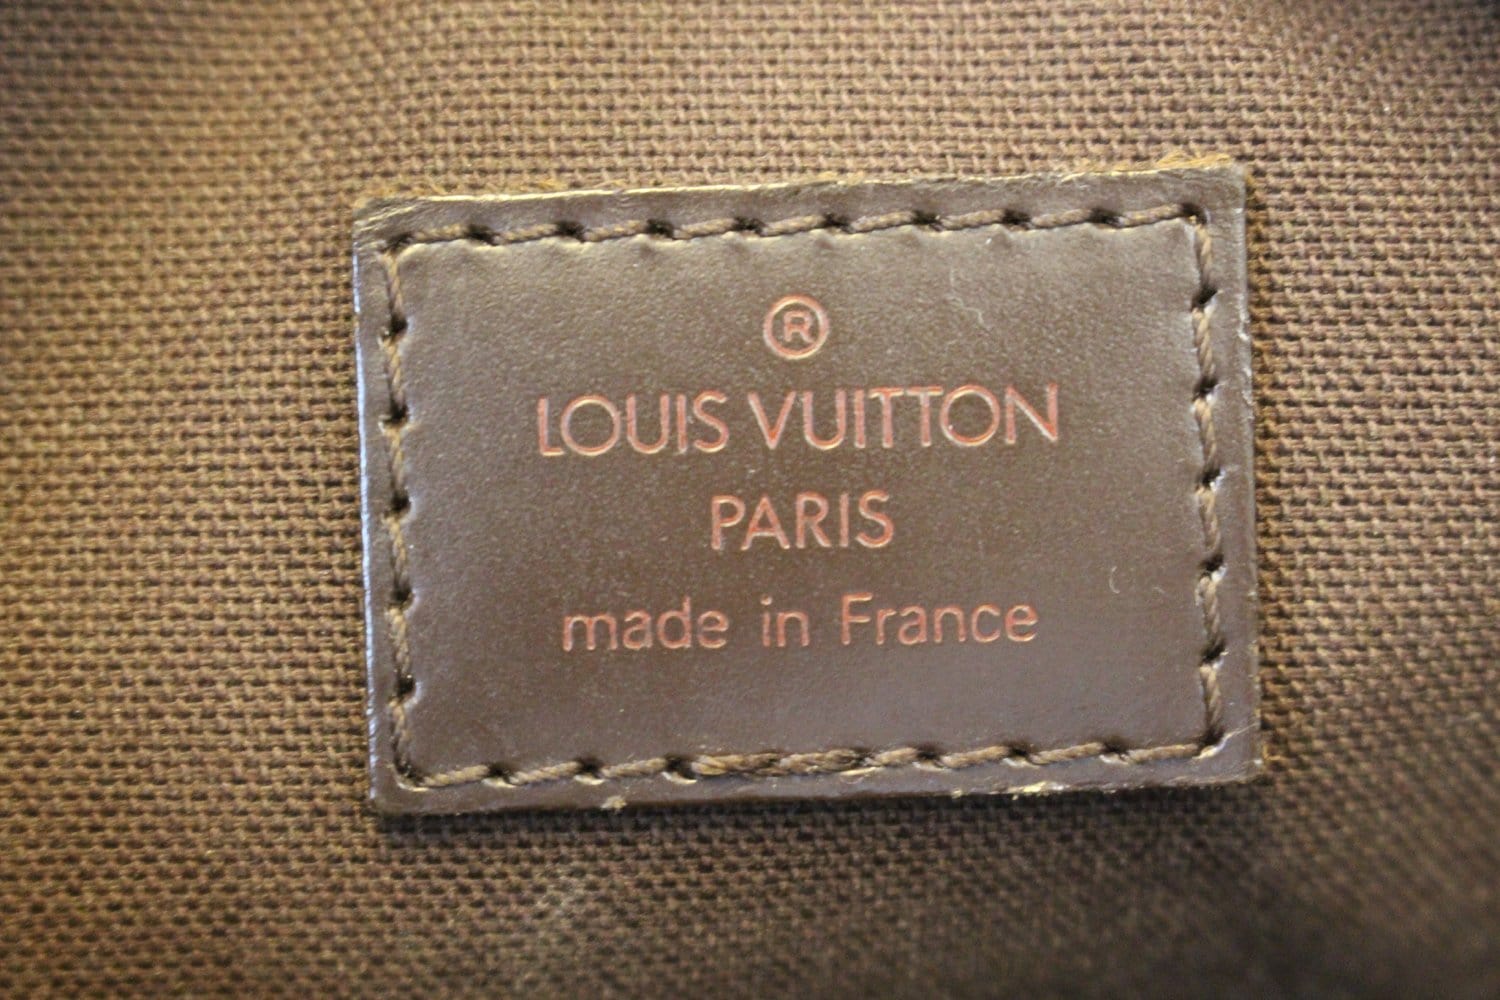 Louis Vuitton Olav Pm N41442 Ebene Damier Mi0065 Shoulder Bag